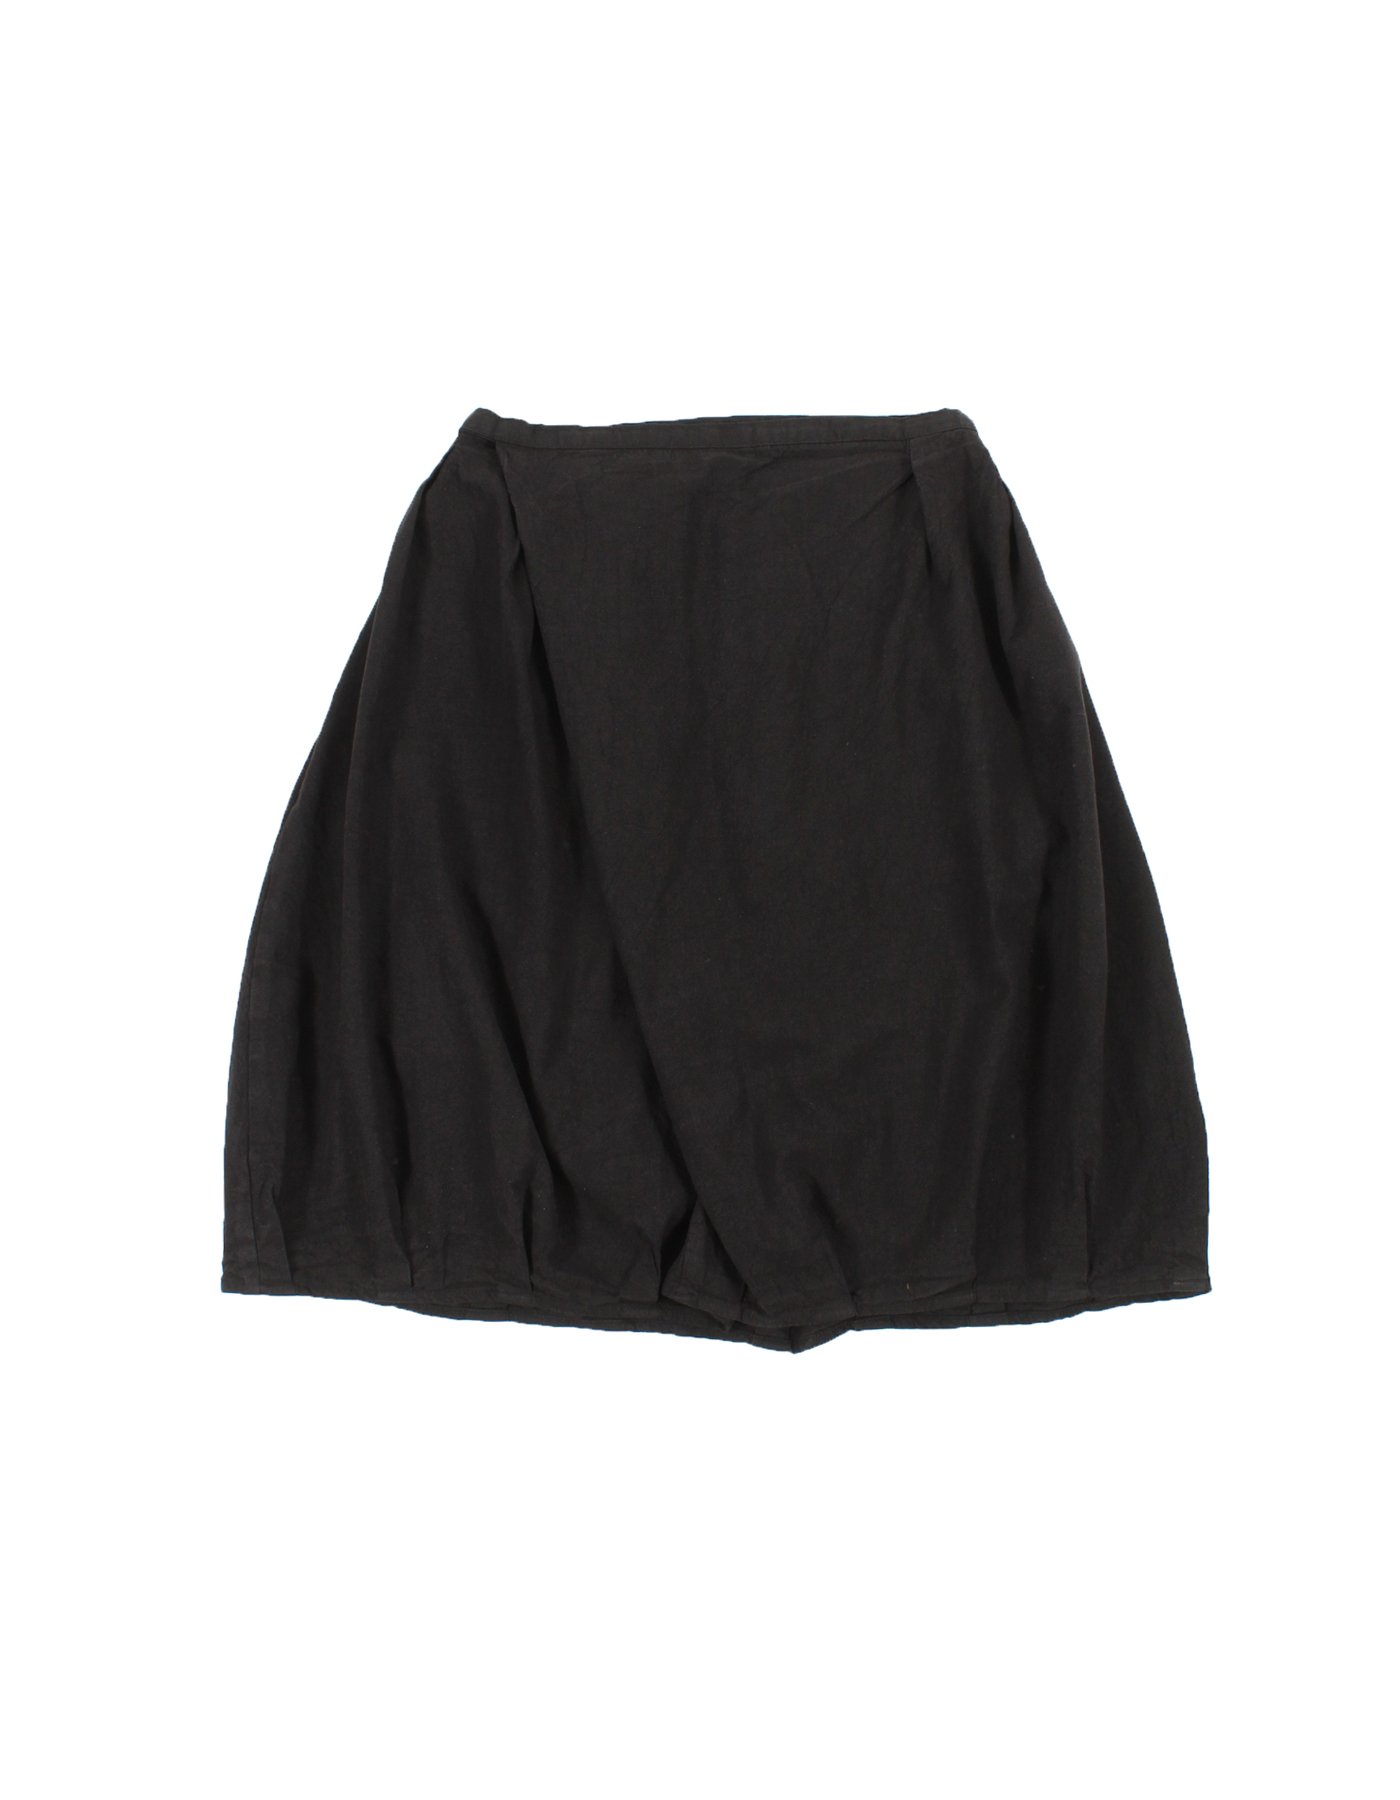 Skirts | Prospective Flow | Japanese Fashion for Men | プロスペクティブフロー